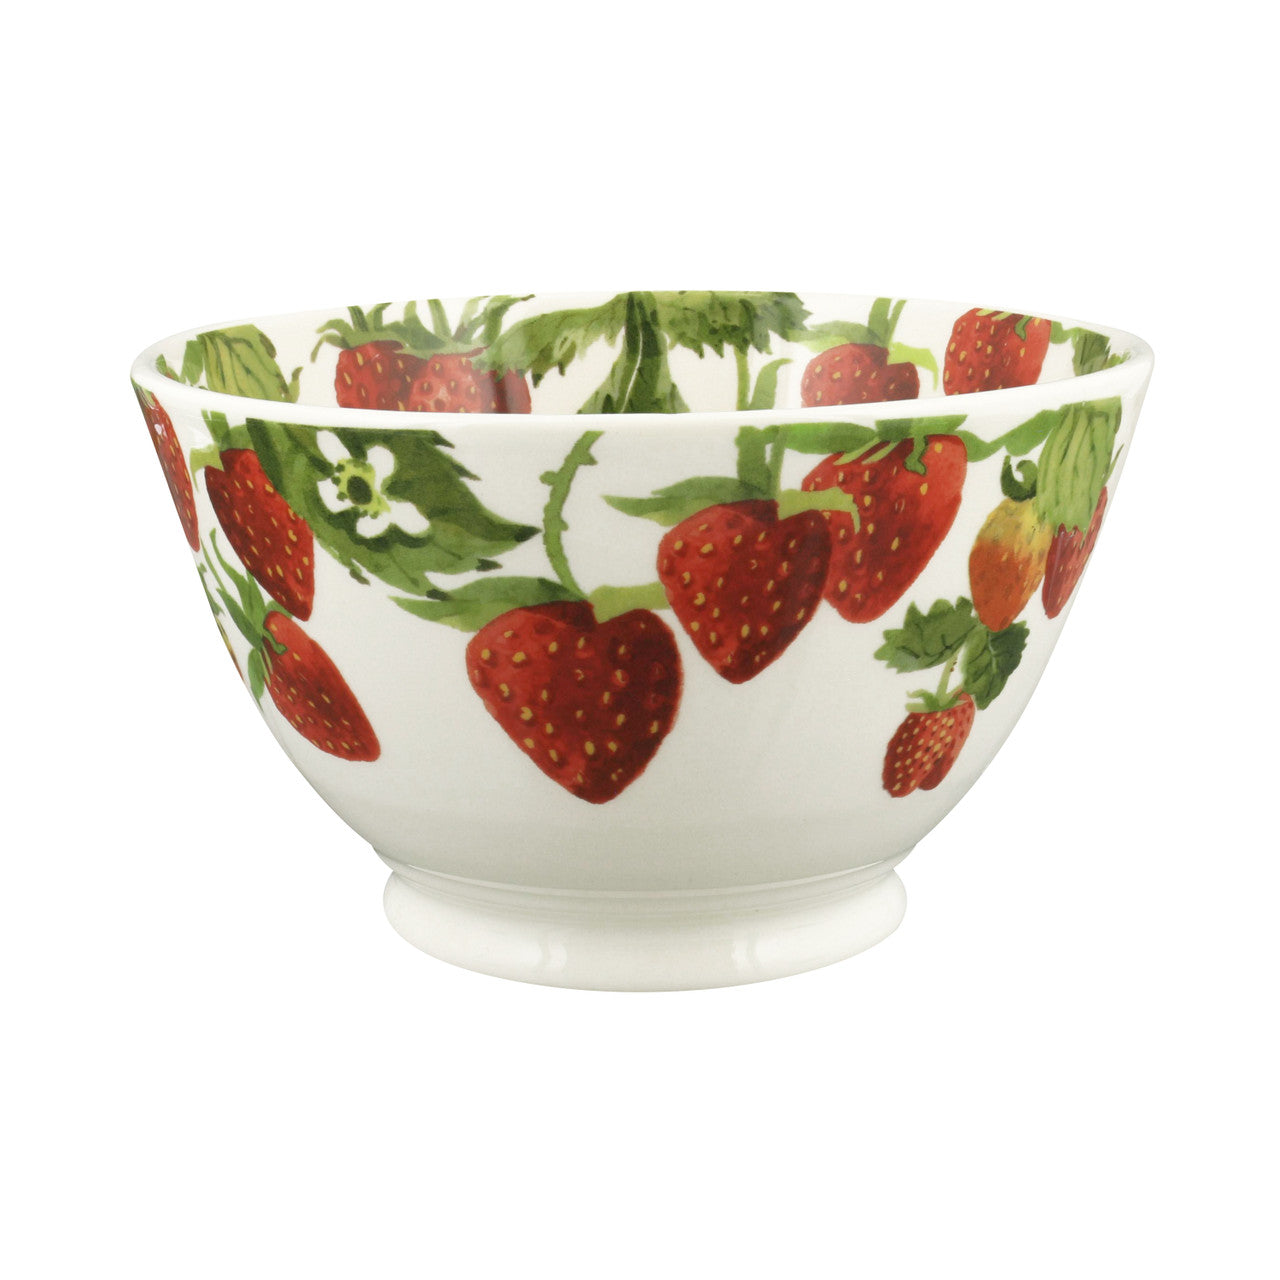 Vegetable Garden Strawberries Medium Old Bowl by Emma Bridgewater.